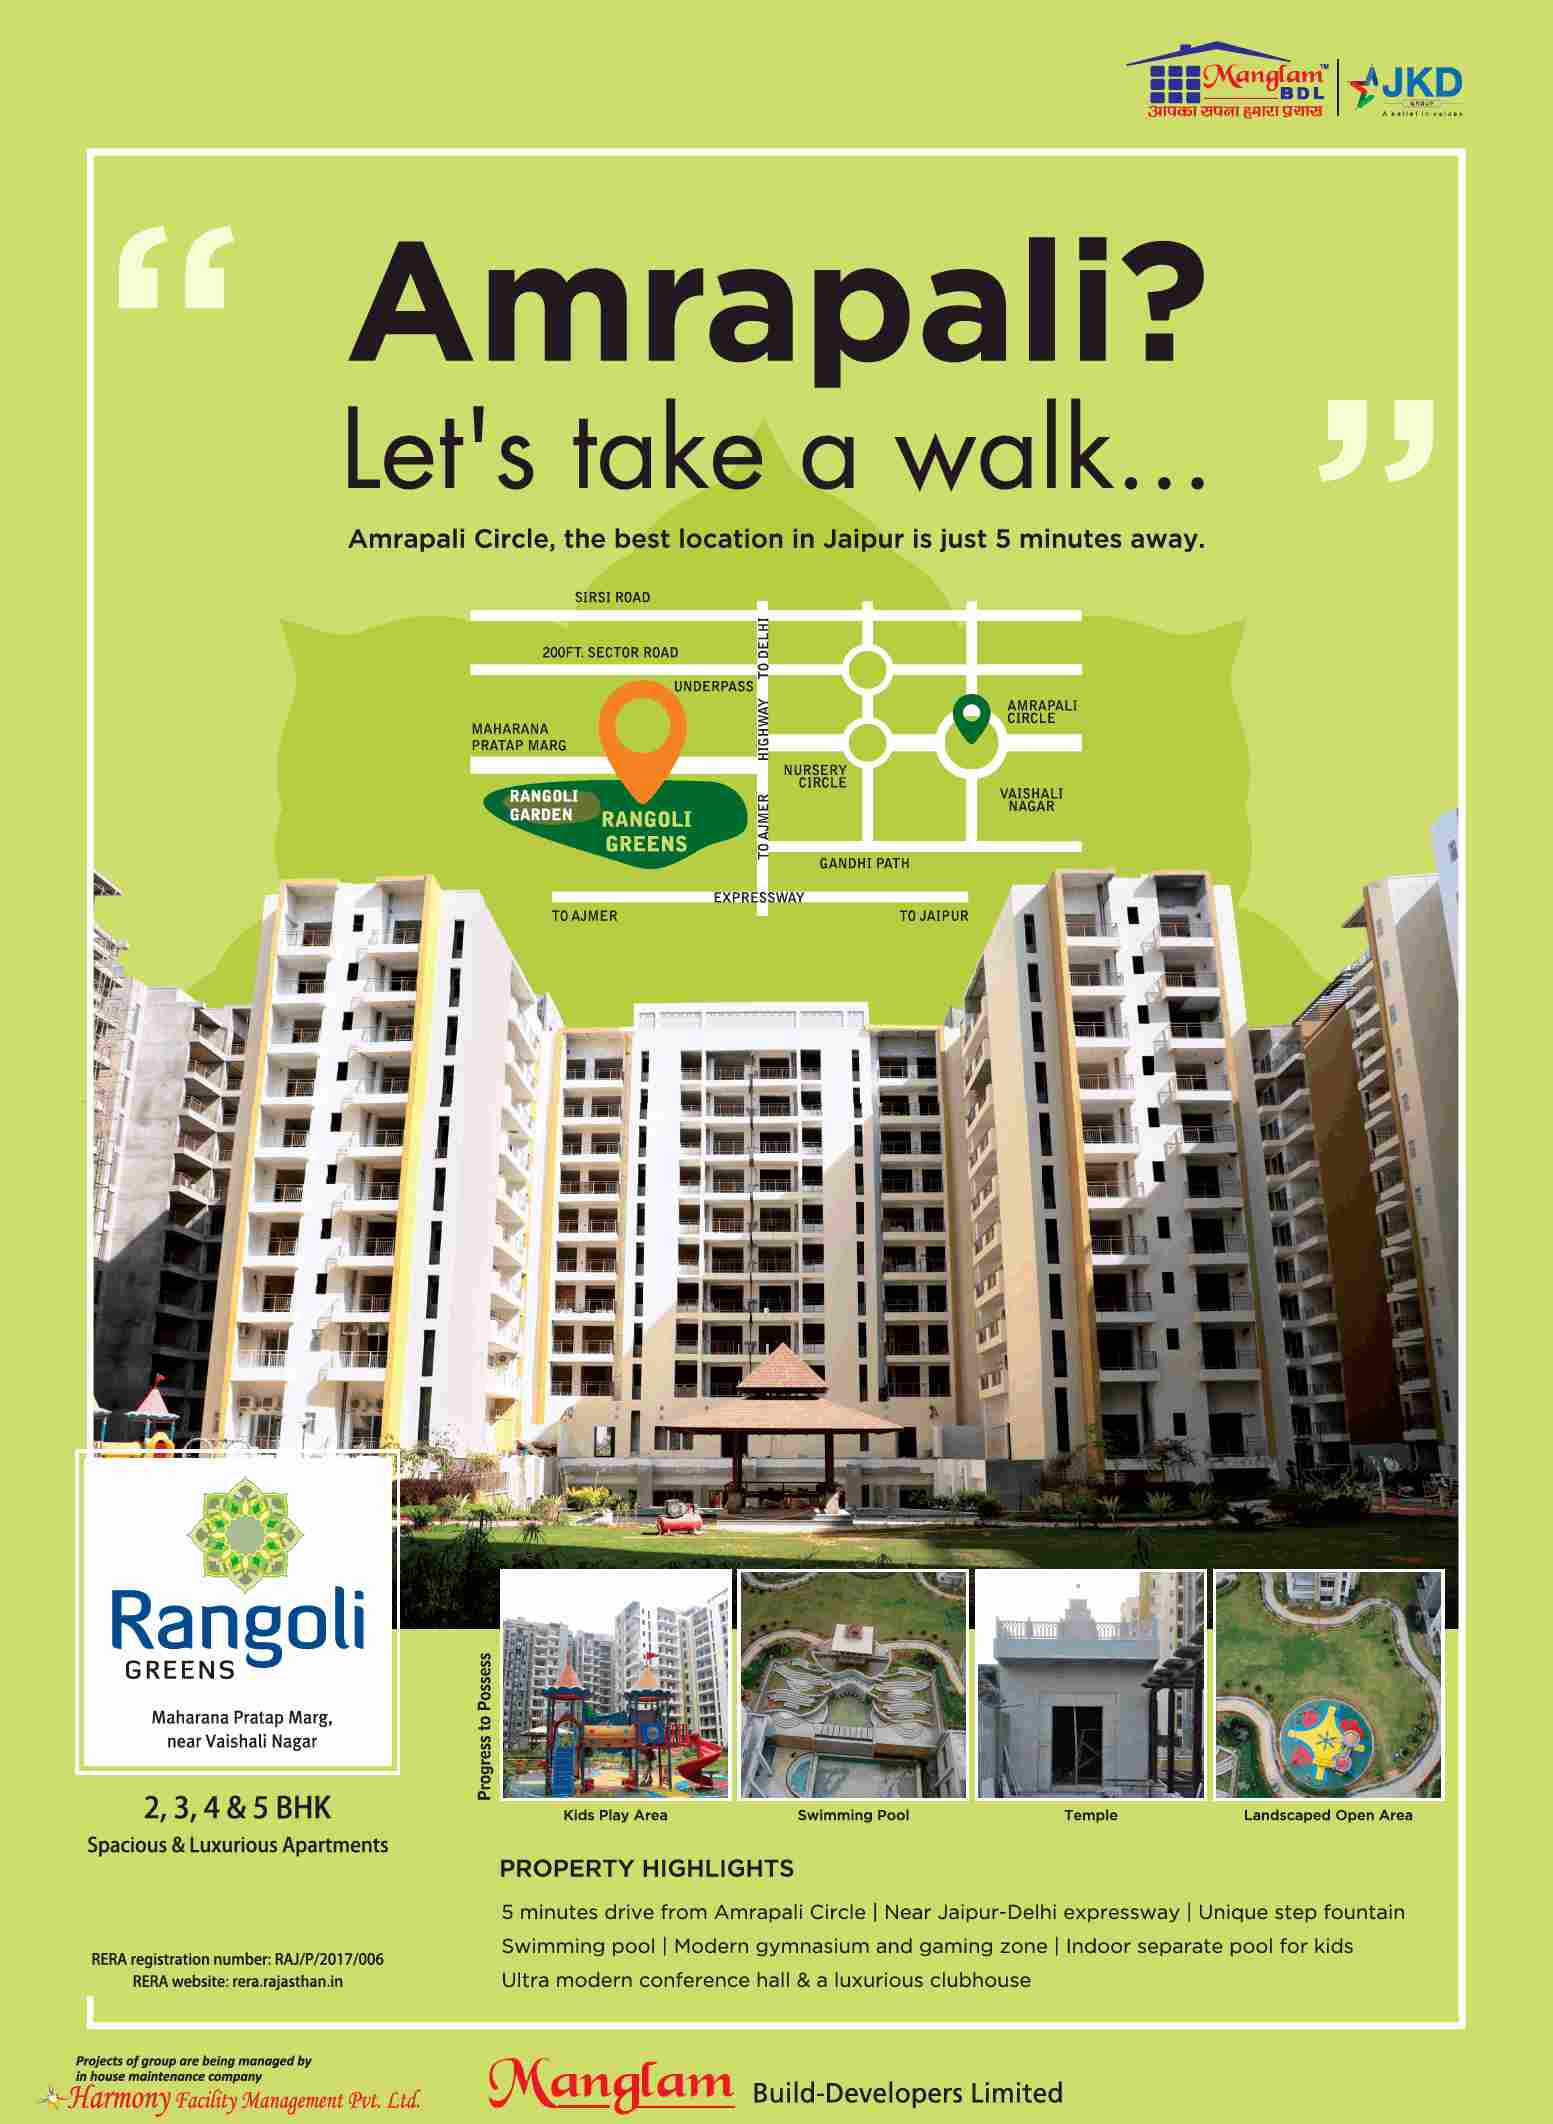 Experience the modern amenities at Manglam Rangoli Greens in Jaipur Update